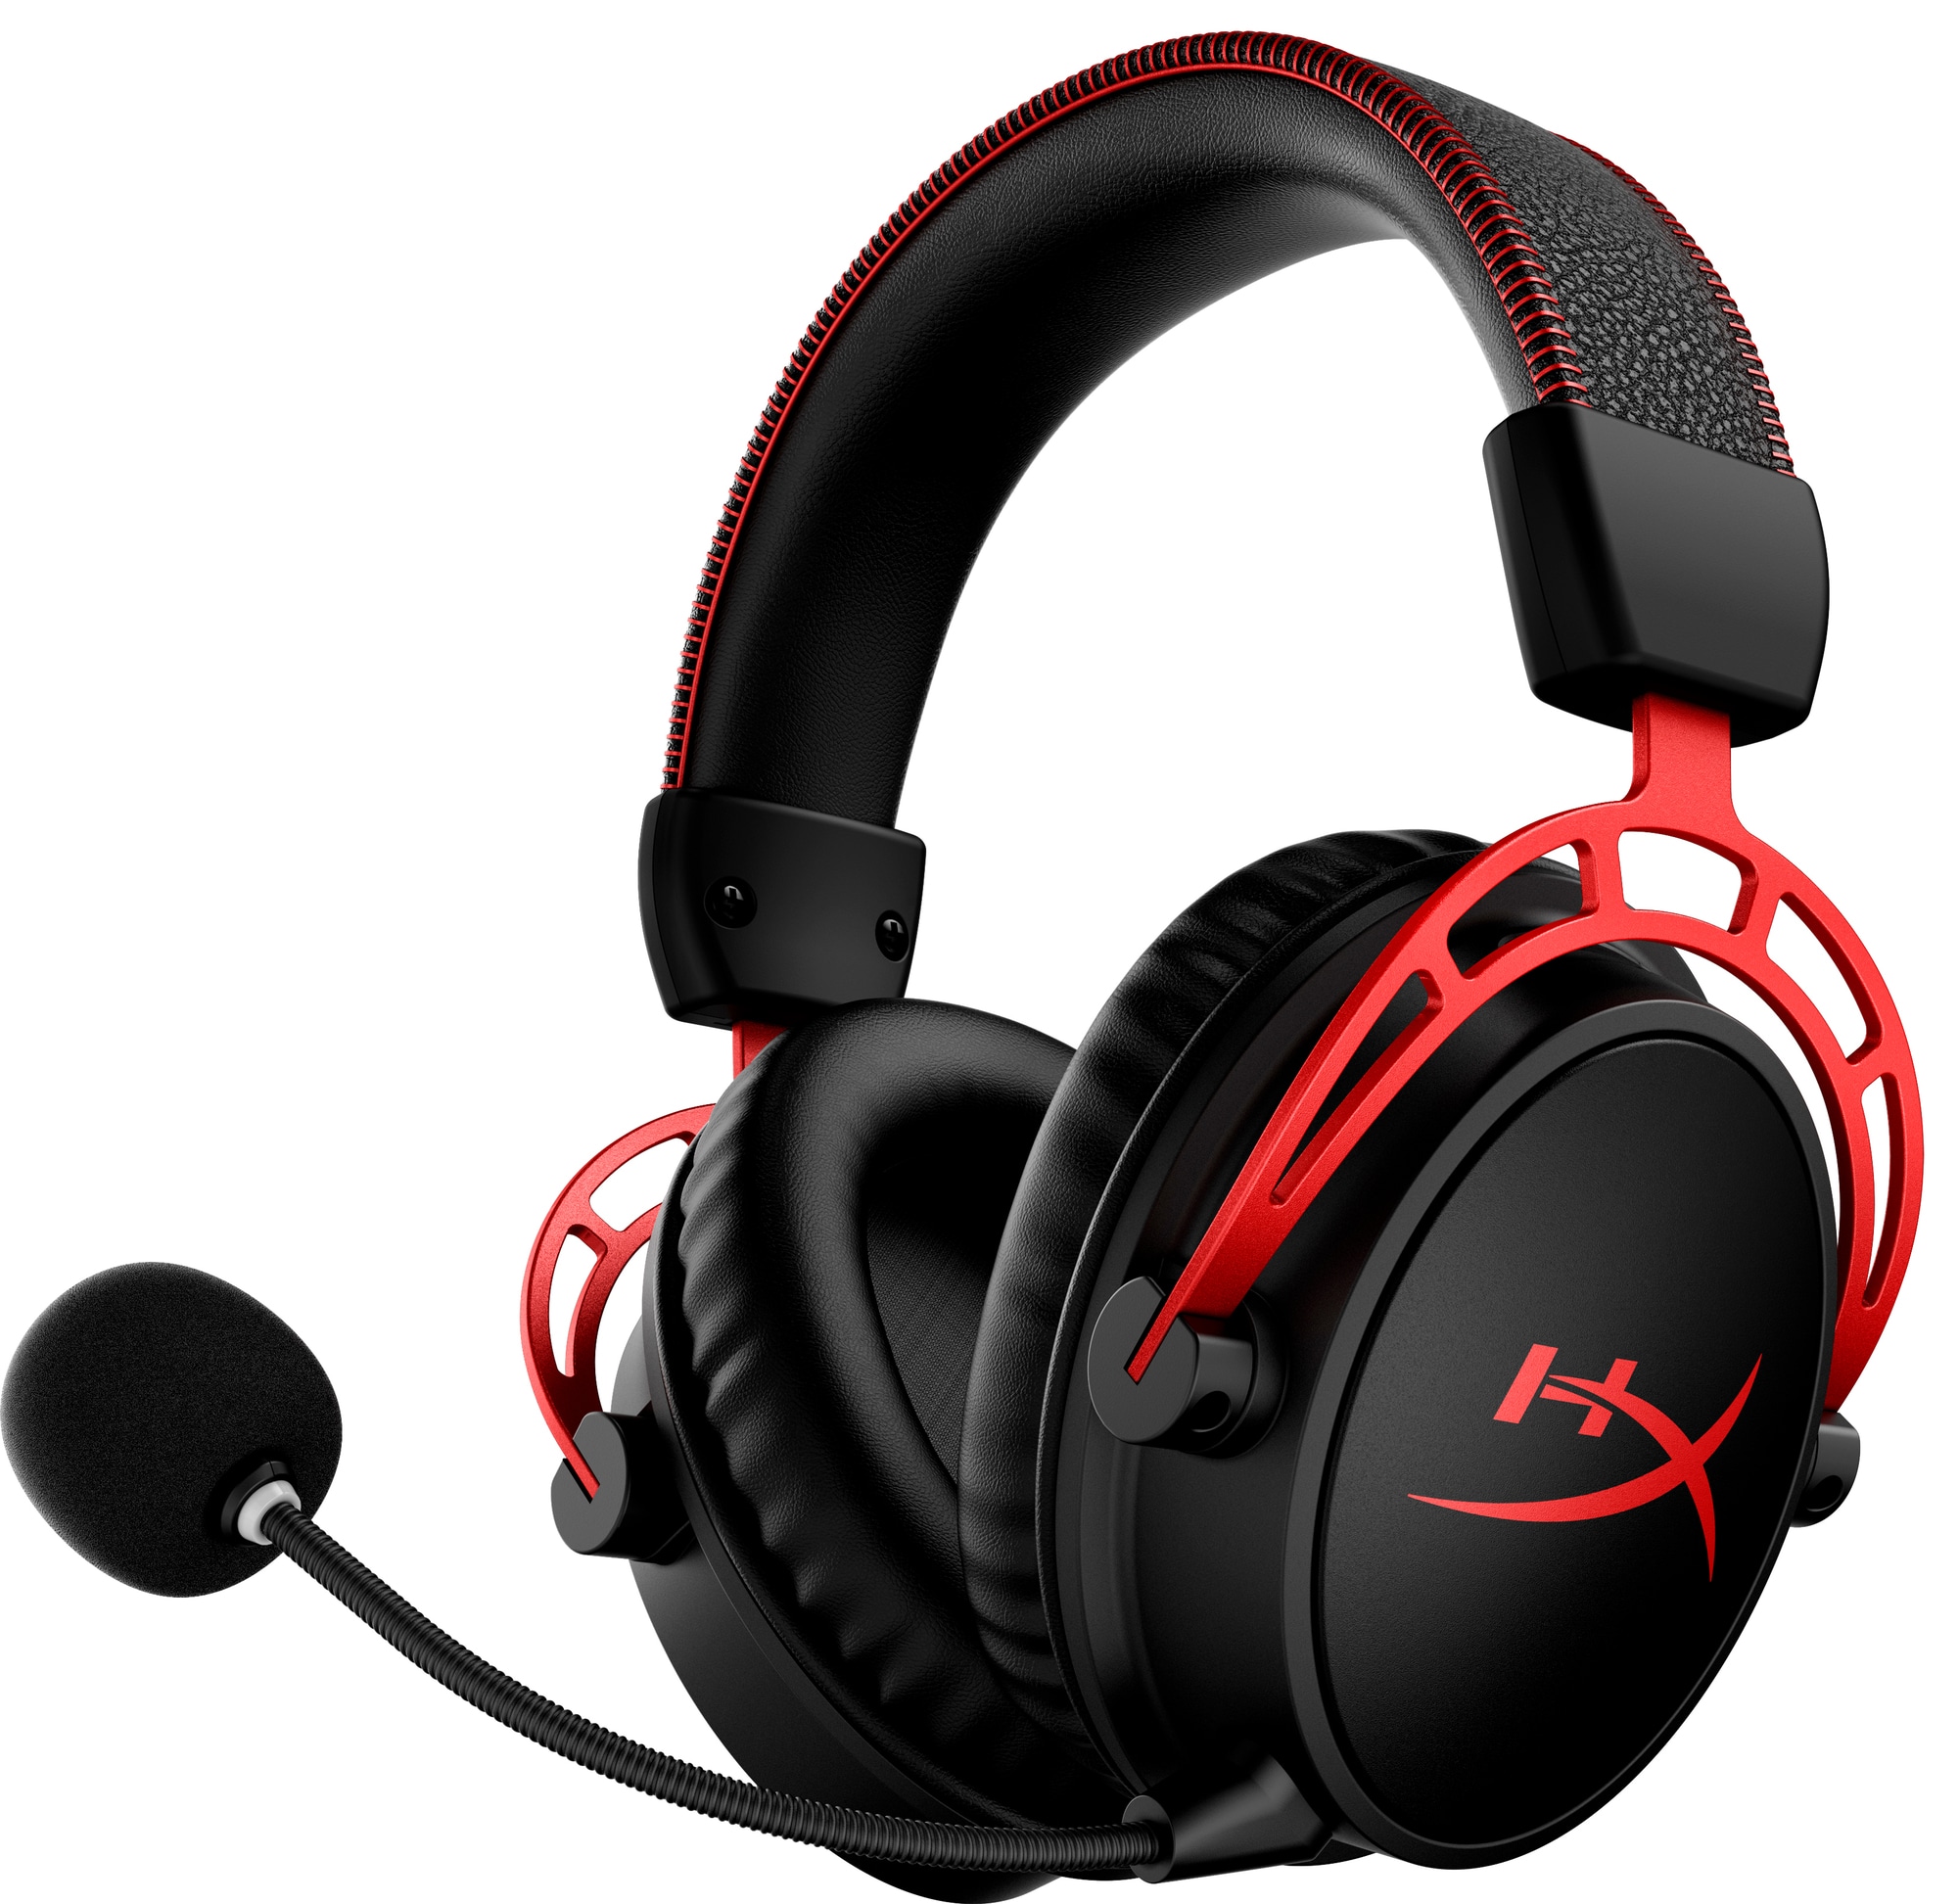 HyperX Cloud Alpha trådlöst gaming headset (röd/svart) - Elgiganten